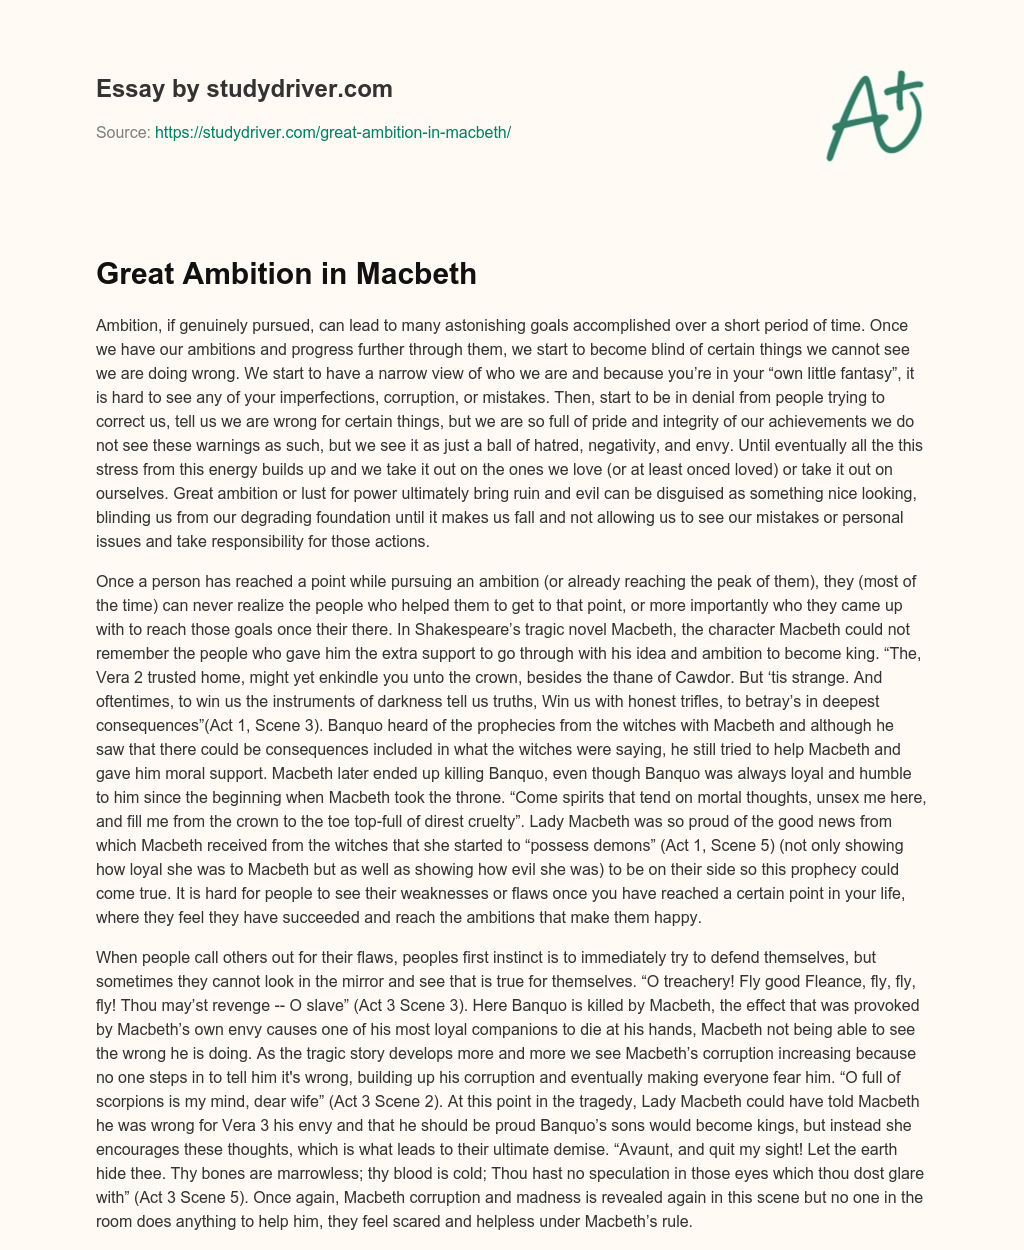 Great Ambition in Macbeth essay